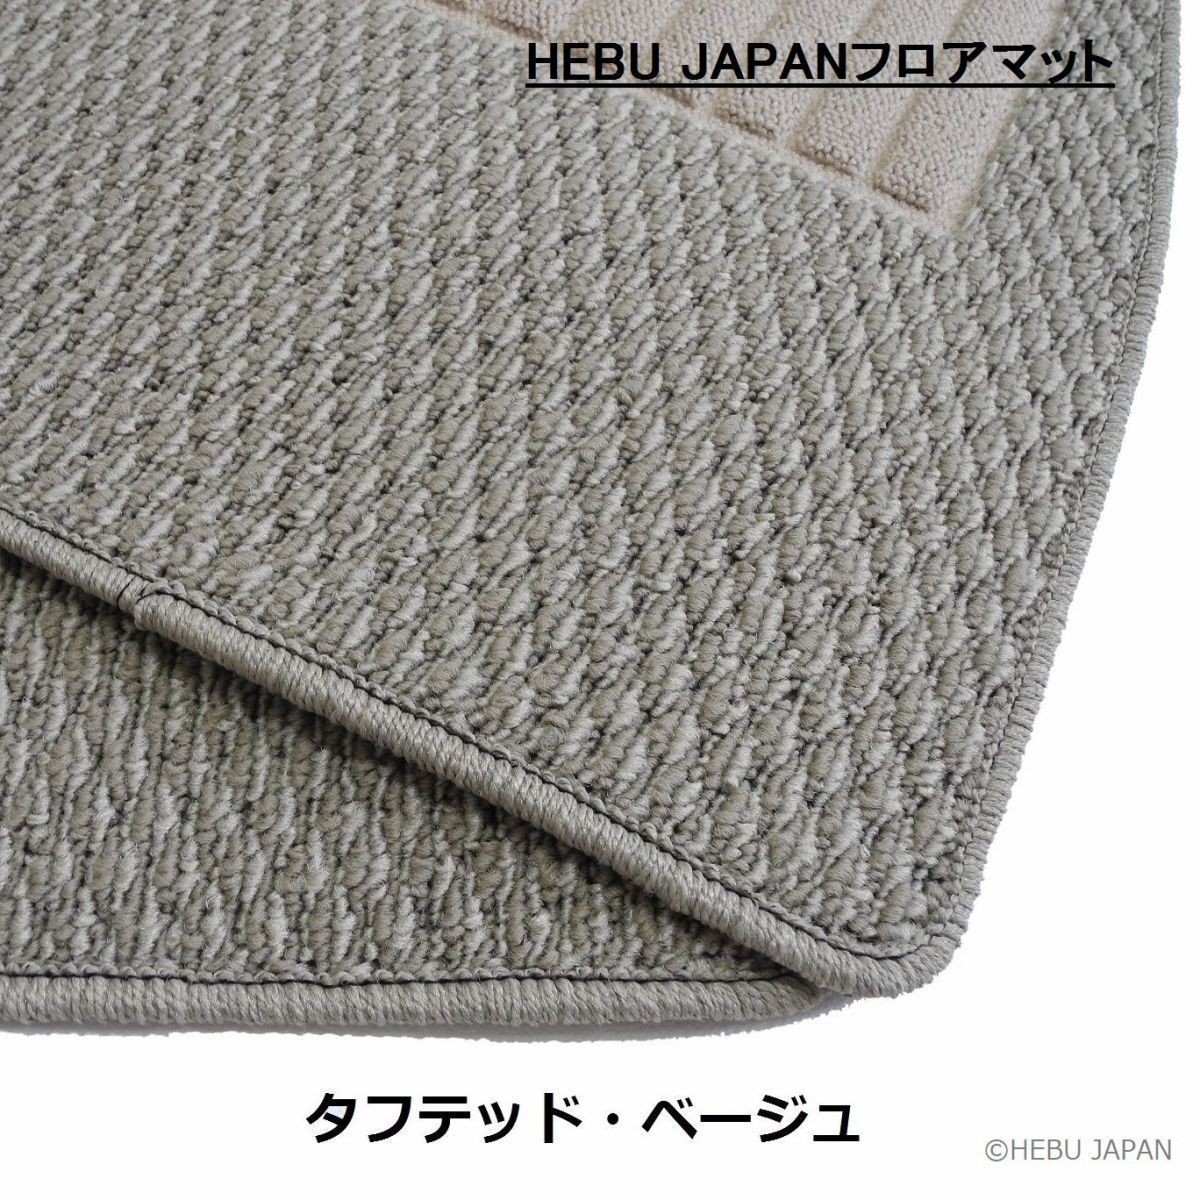  включая доставку HEBU JAPAN Escape RHD коврик на пол бежевый 